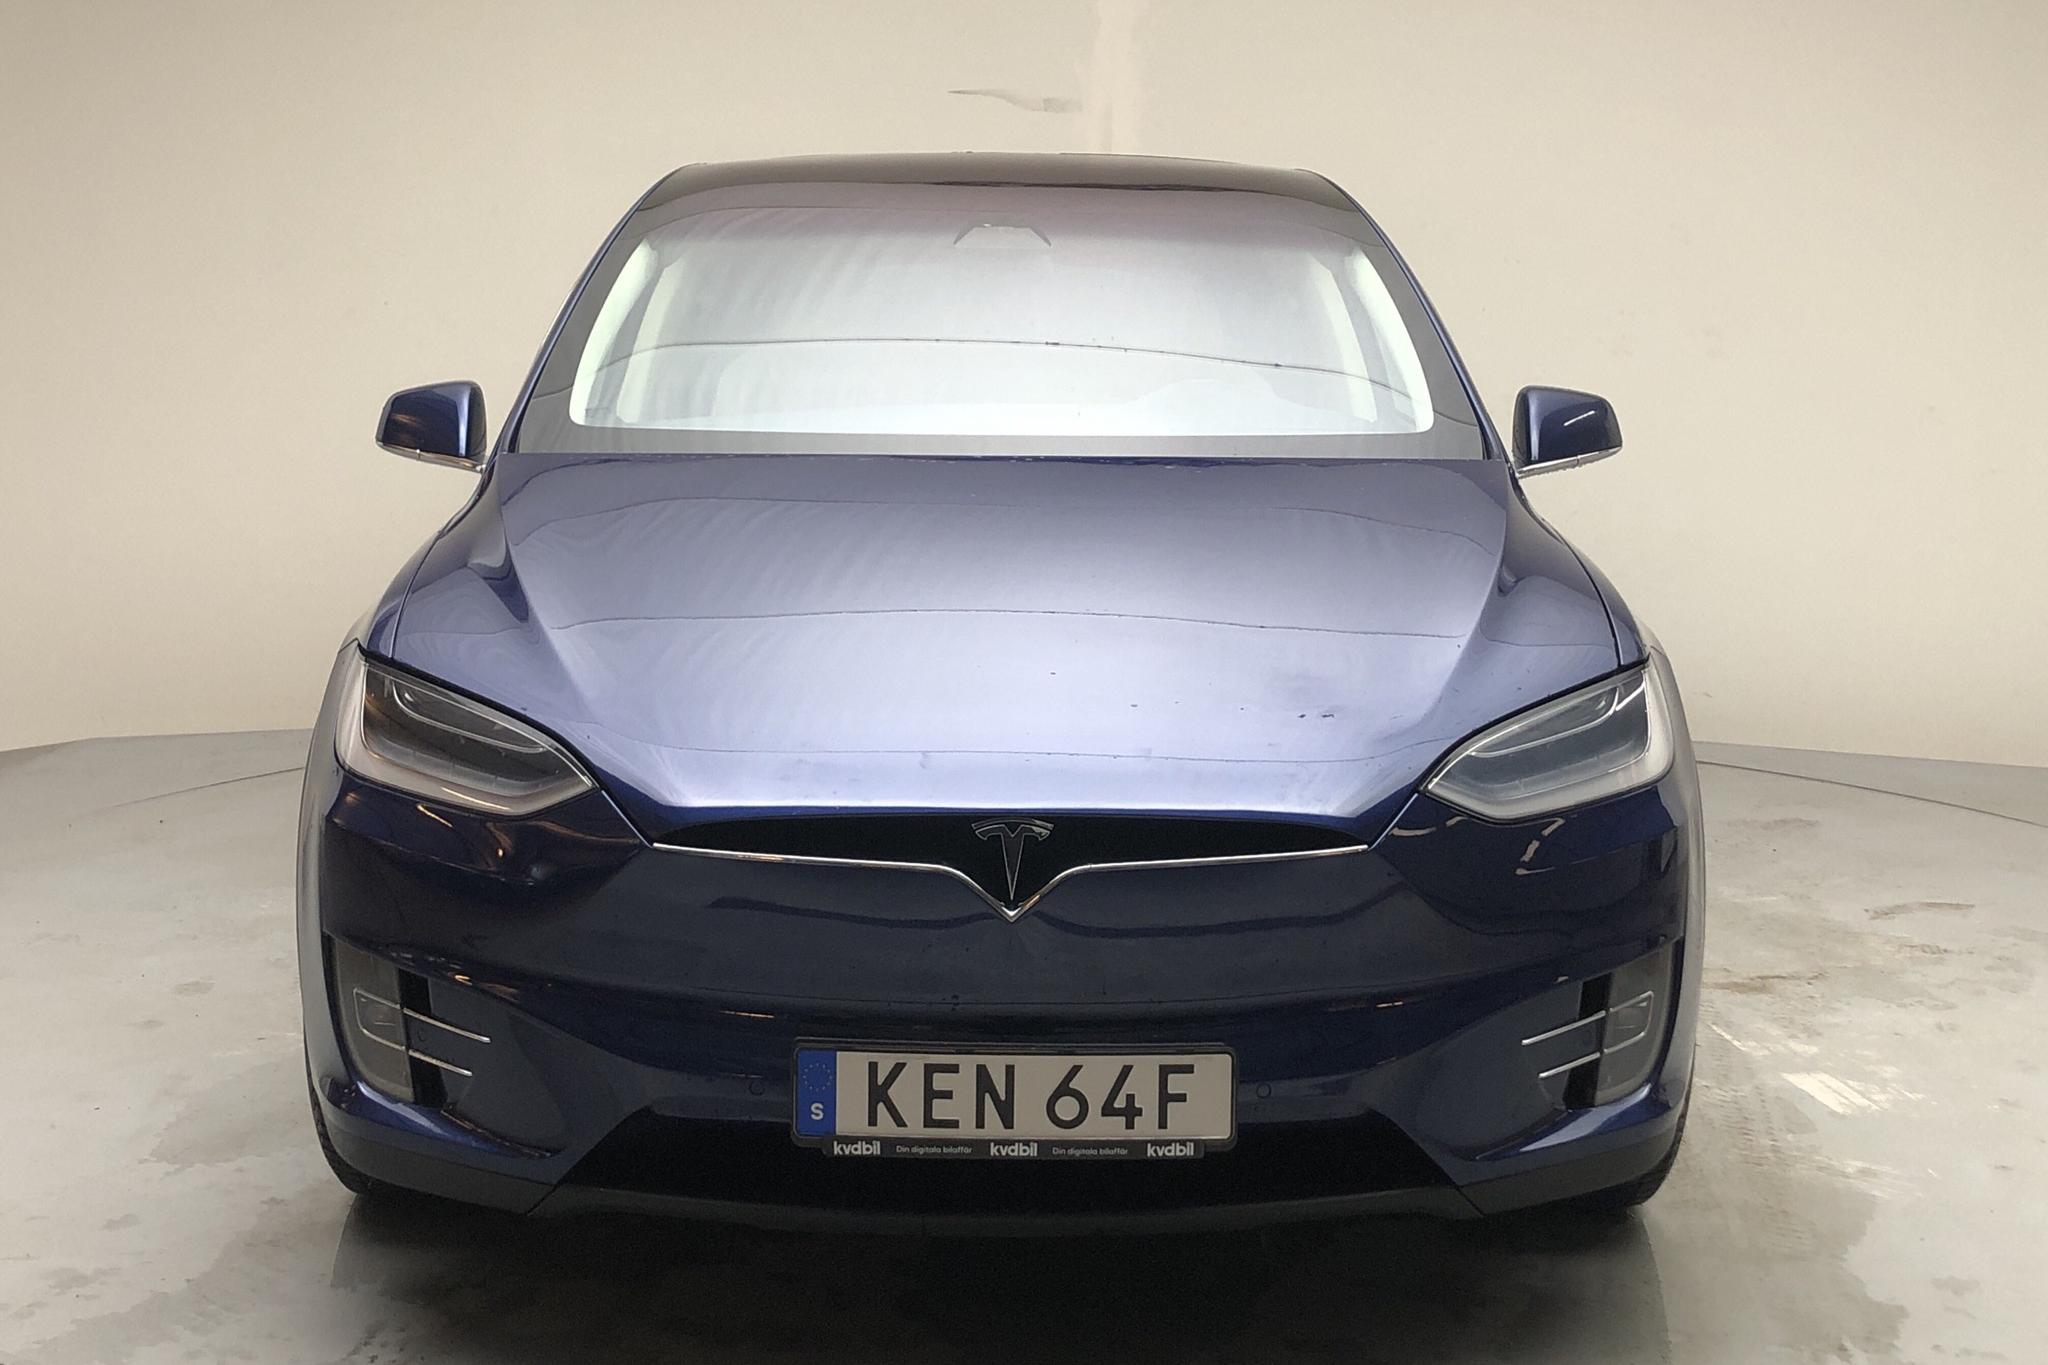 Tesla Model X 75D - 182 870 km - Automatic - blue - 2016